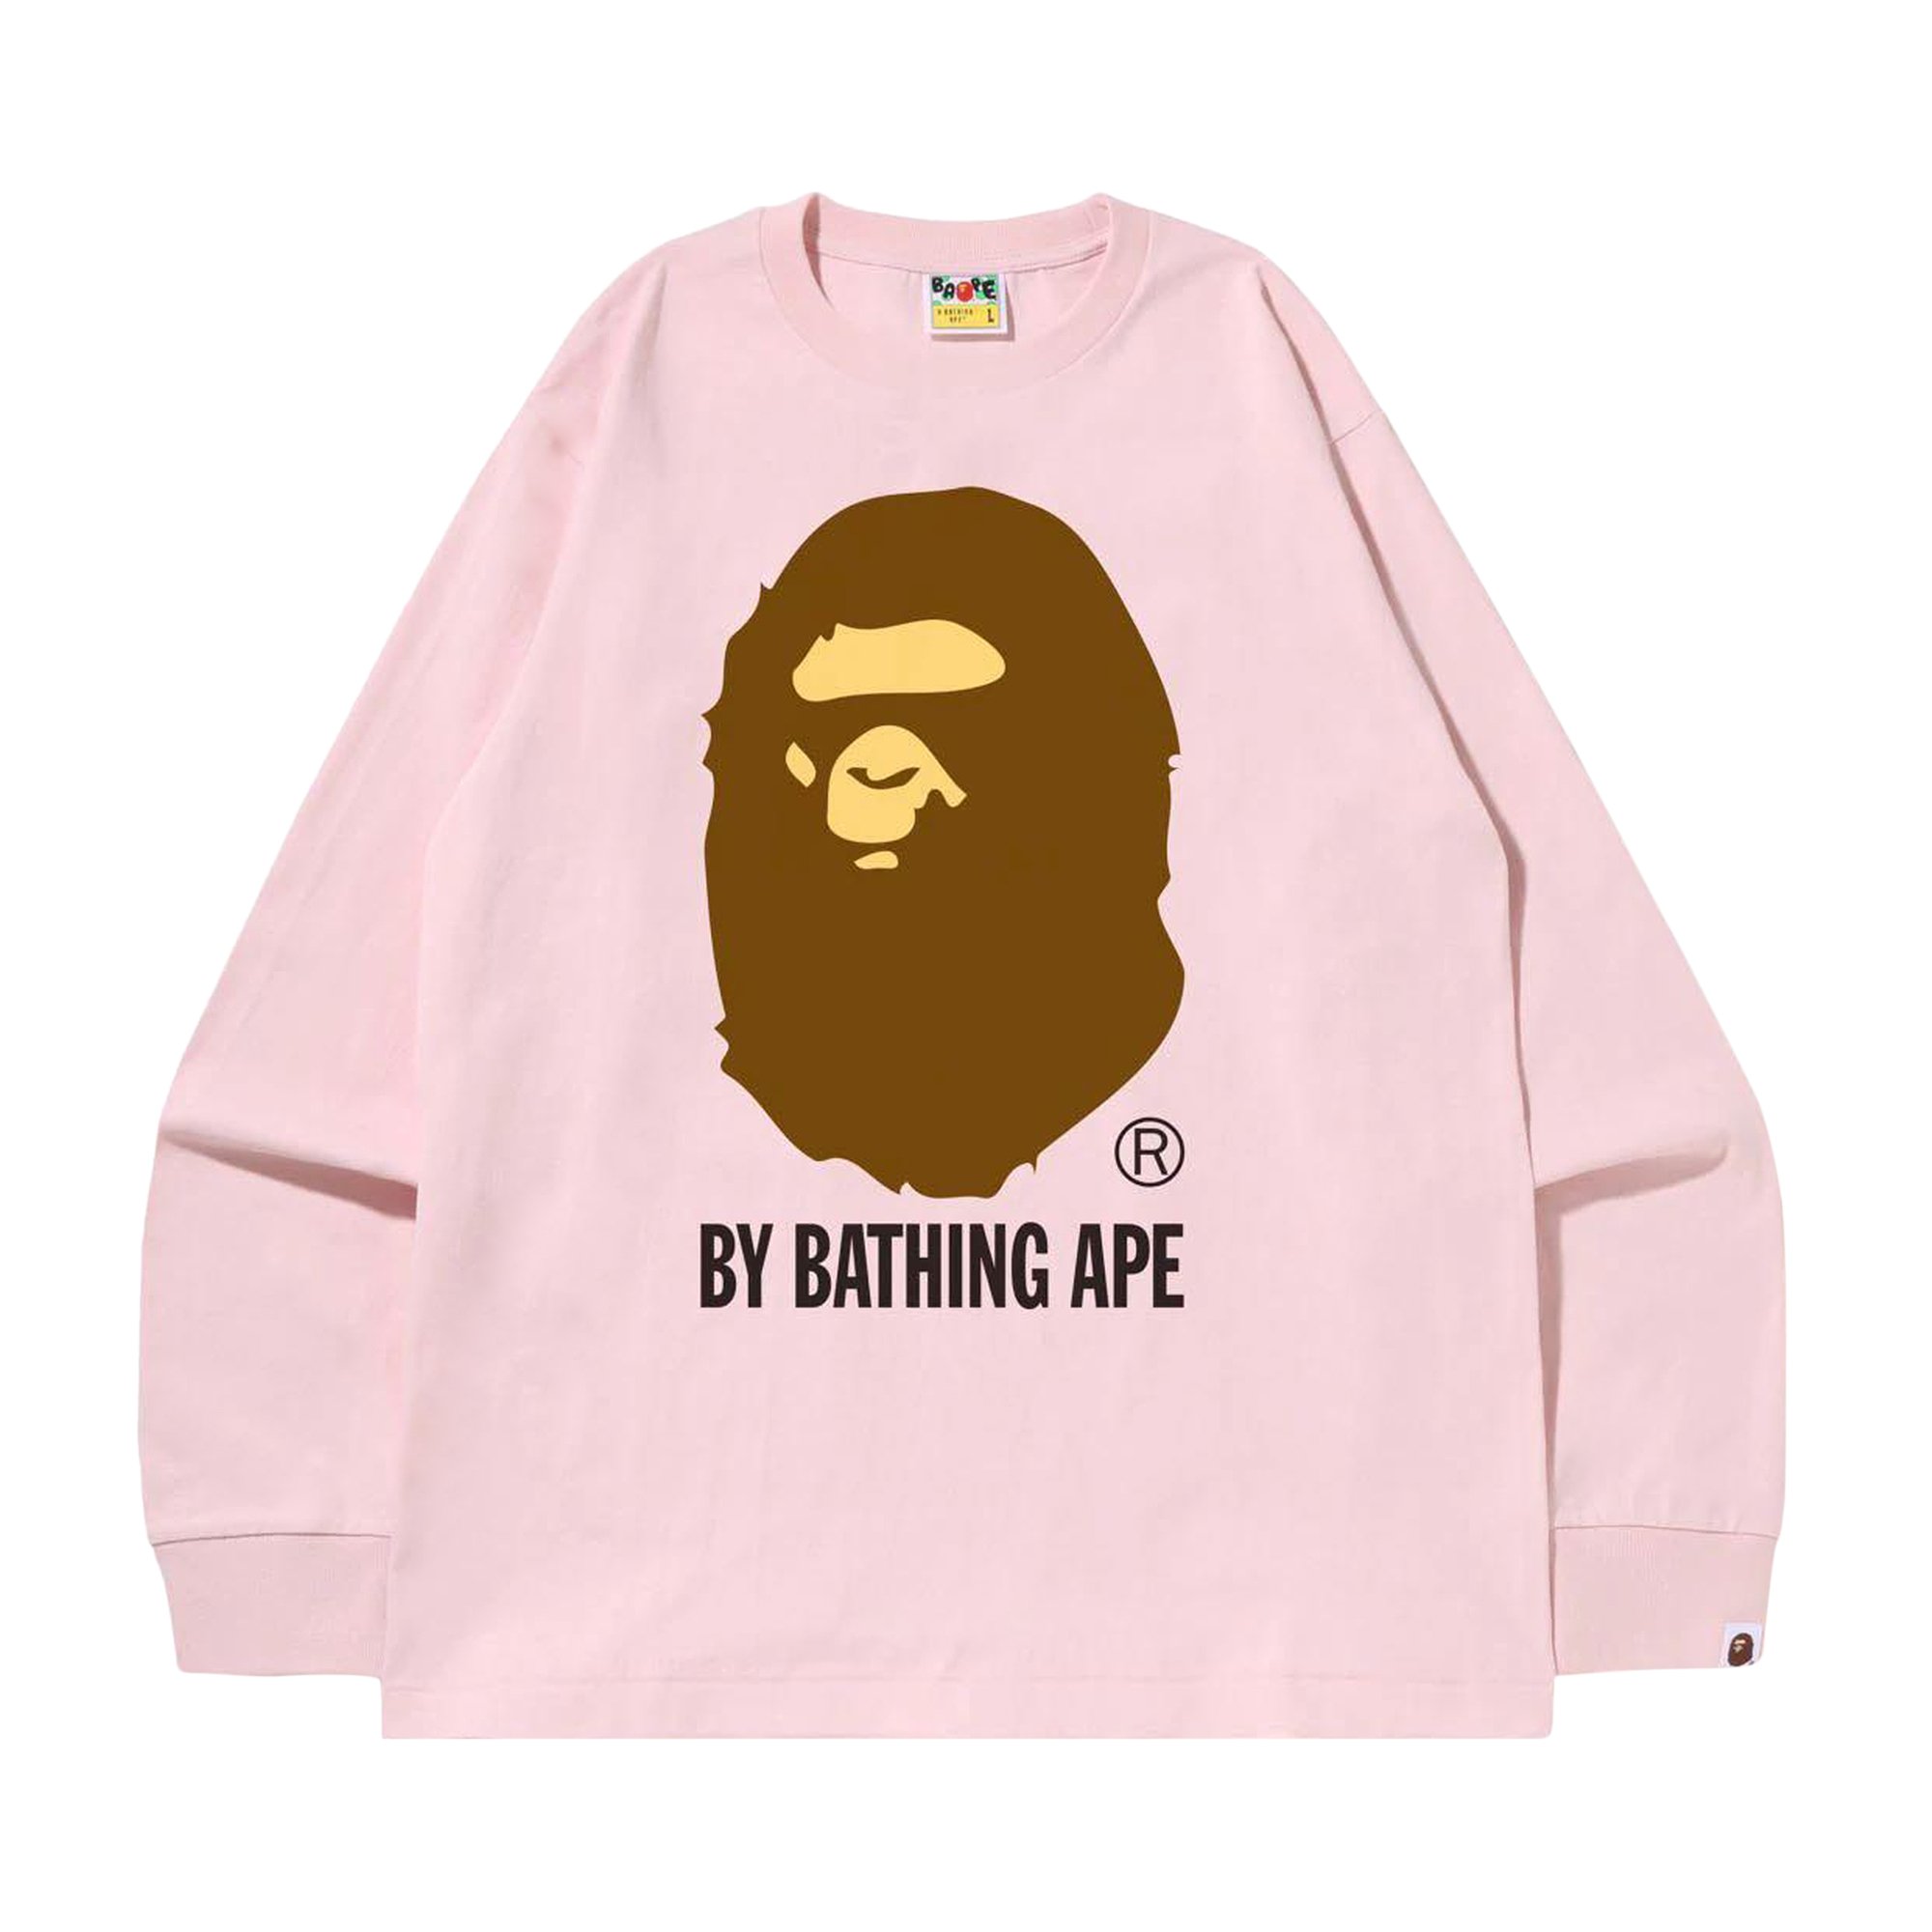 Buy BAPE By Bathing Ape Long-Sleeve Tee 'Pink' - 1I30 111 021 PINK